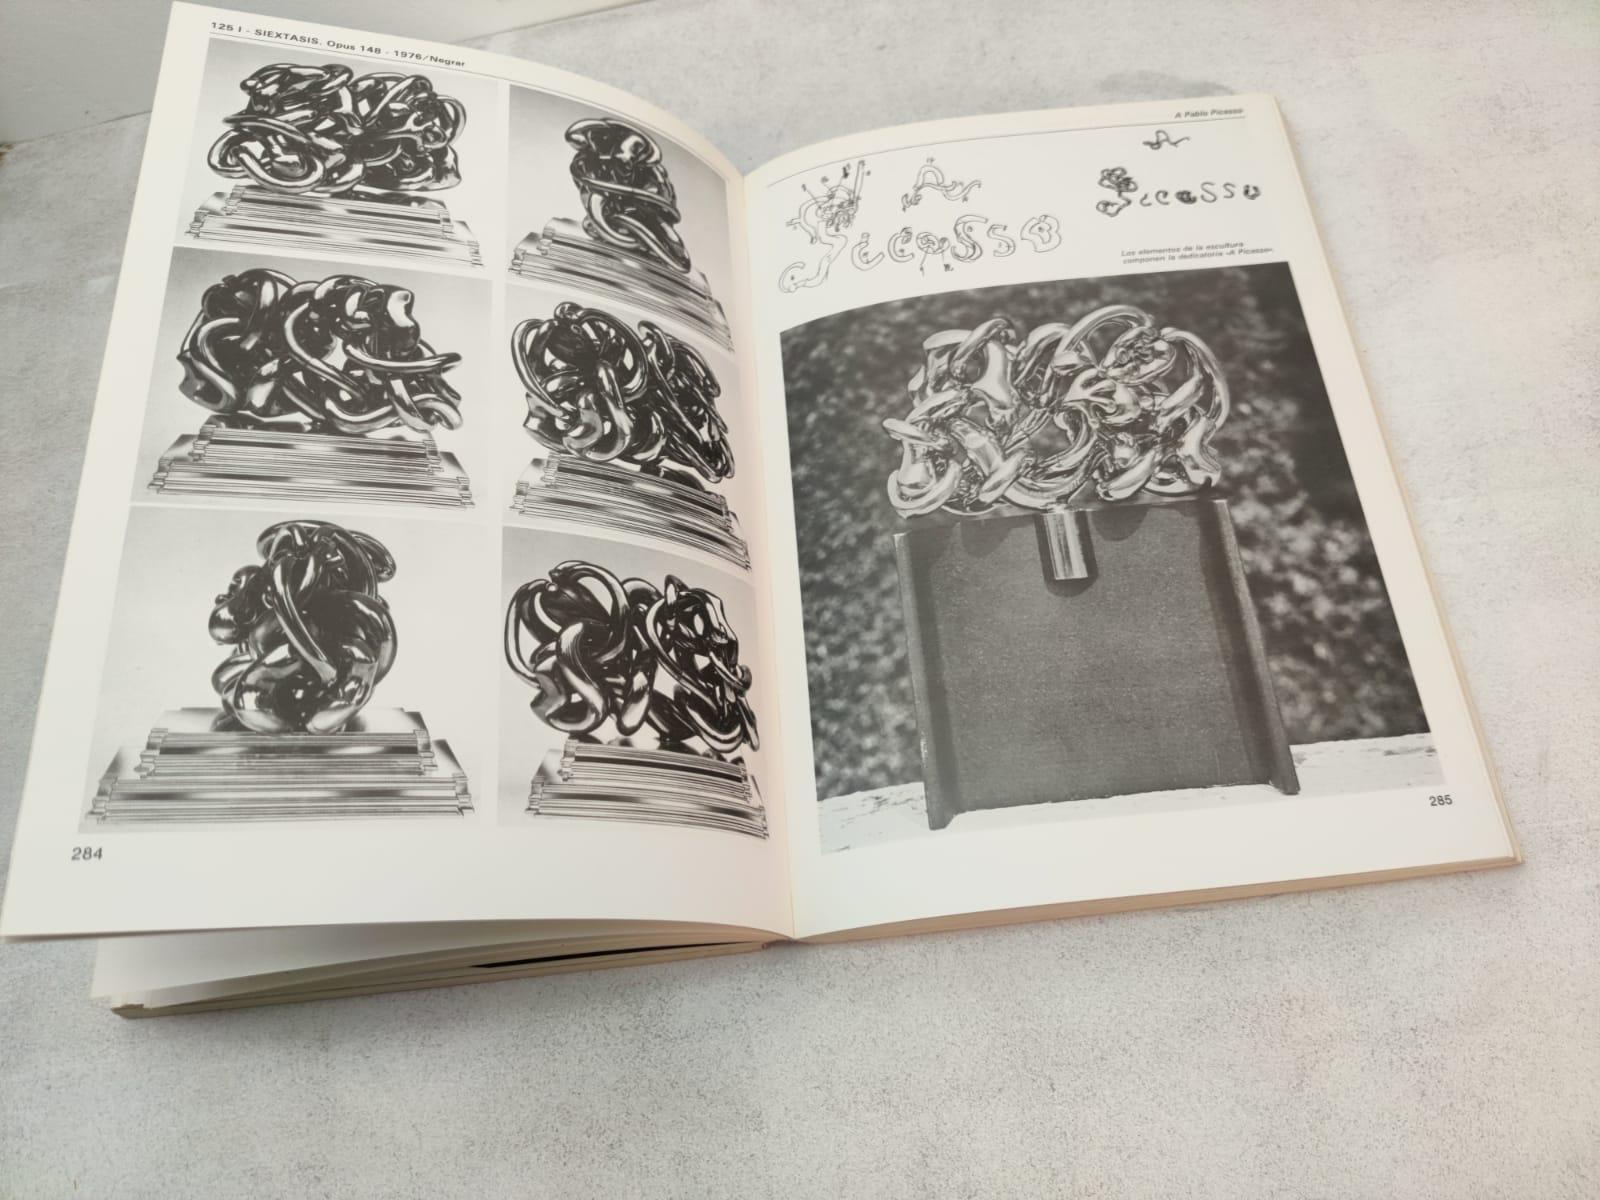 Paper Exclusive Book Antológica Berrocal 1955- 84 Sculptures & Work of Miguel Berrocal For Sale